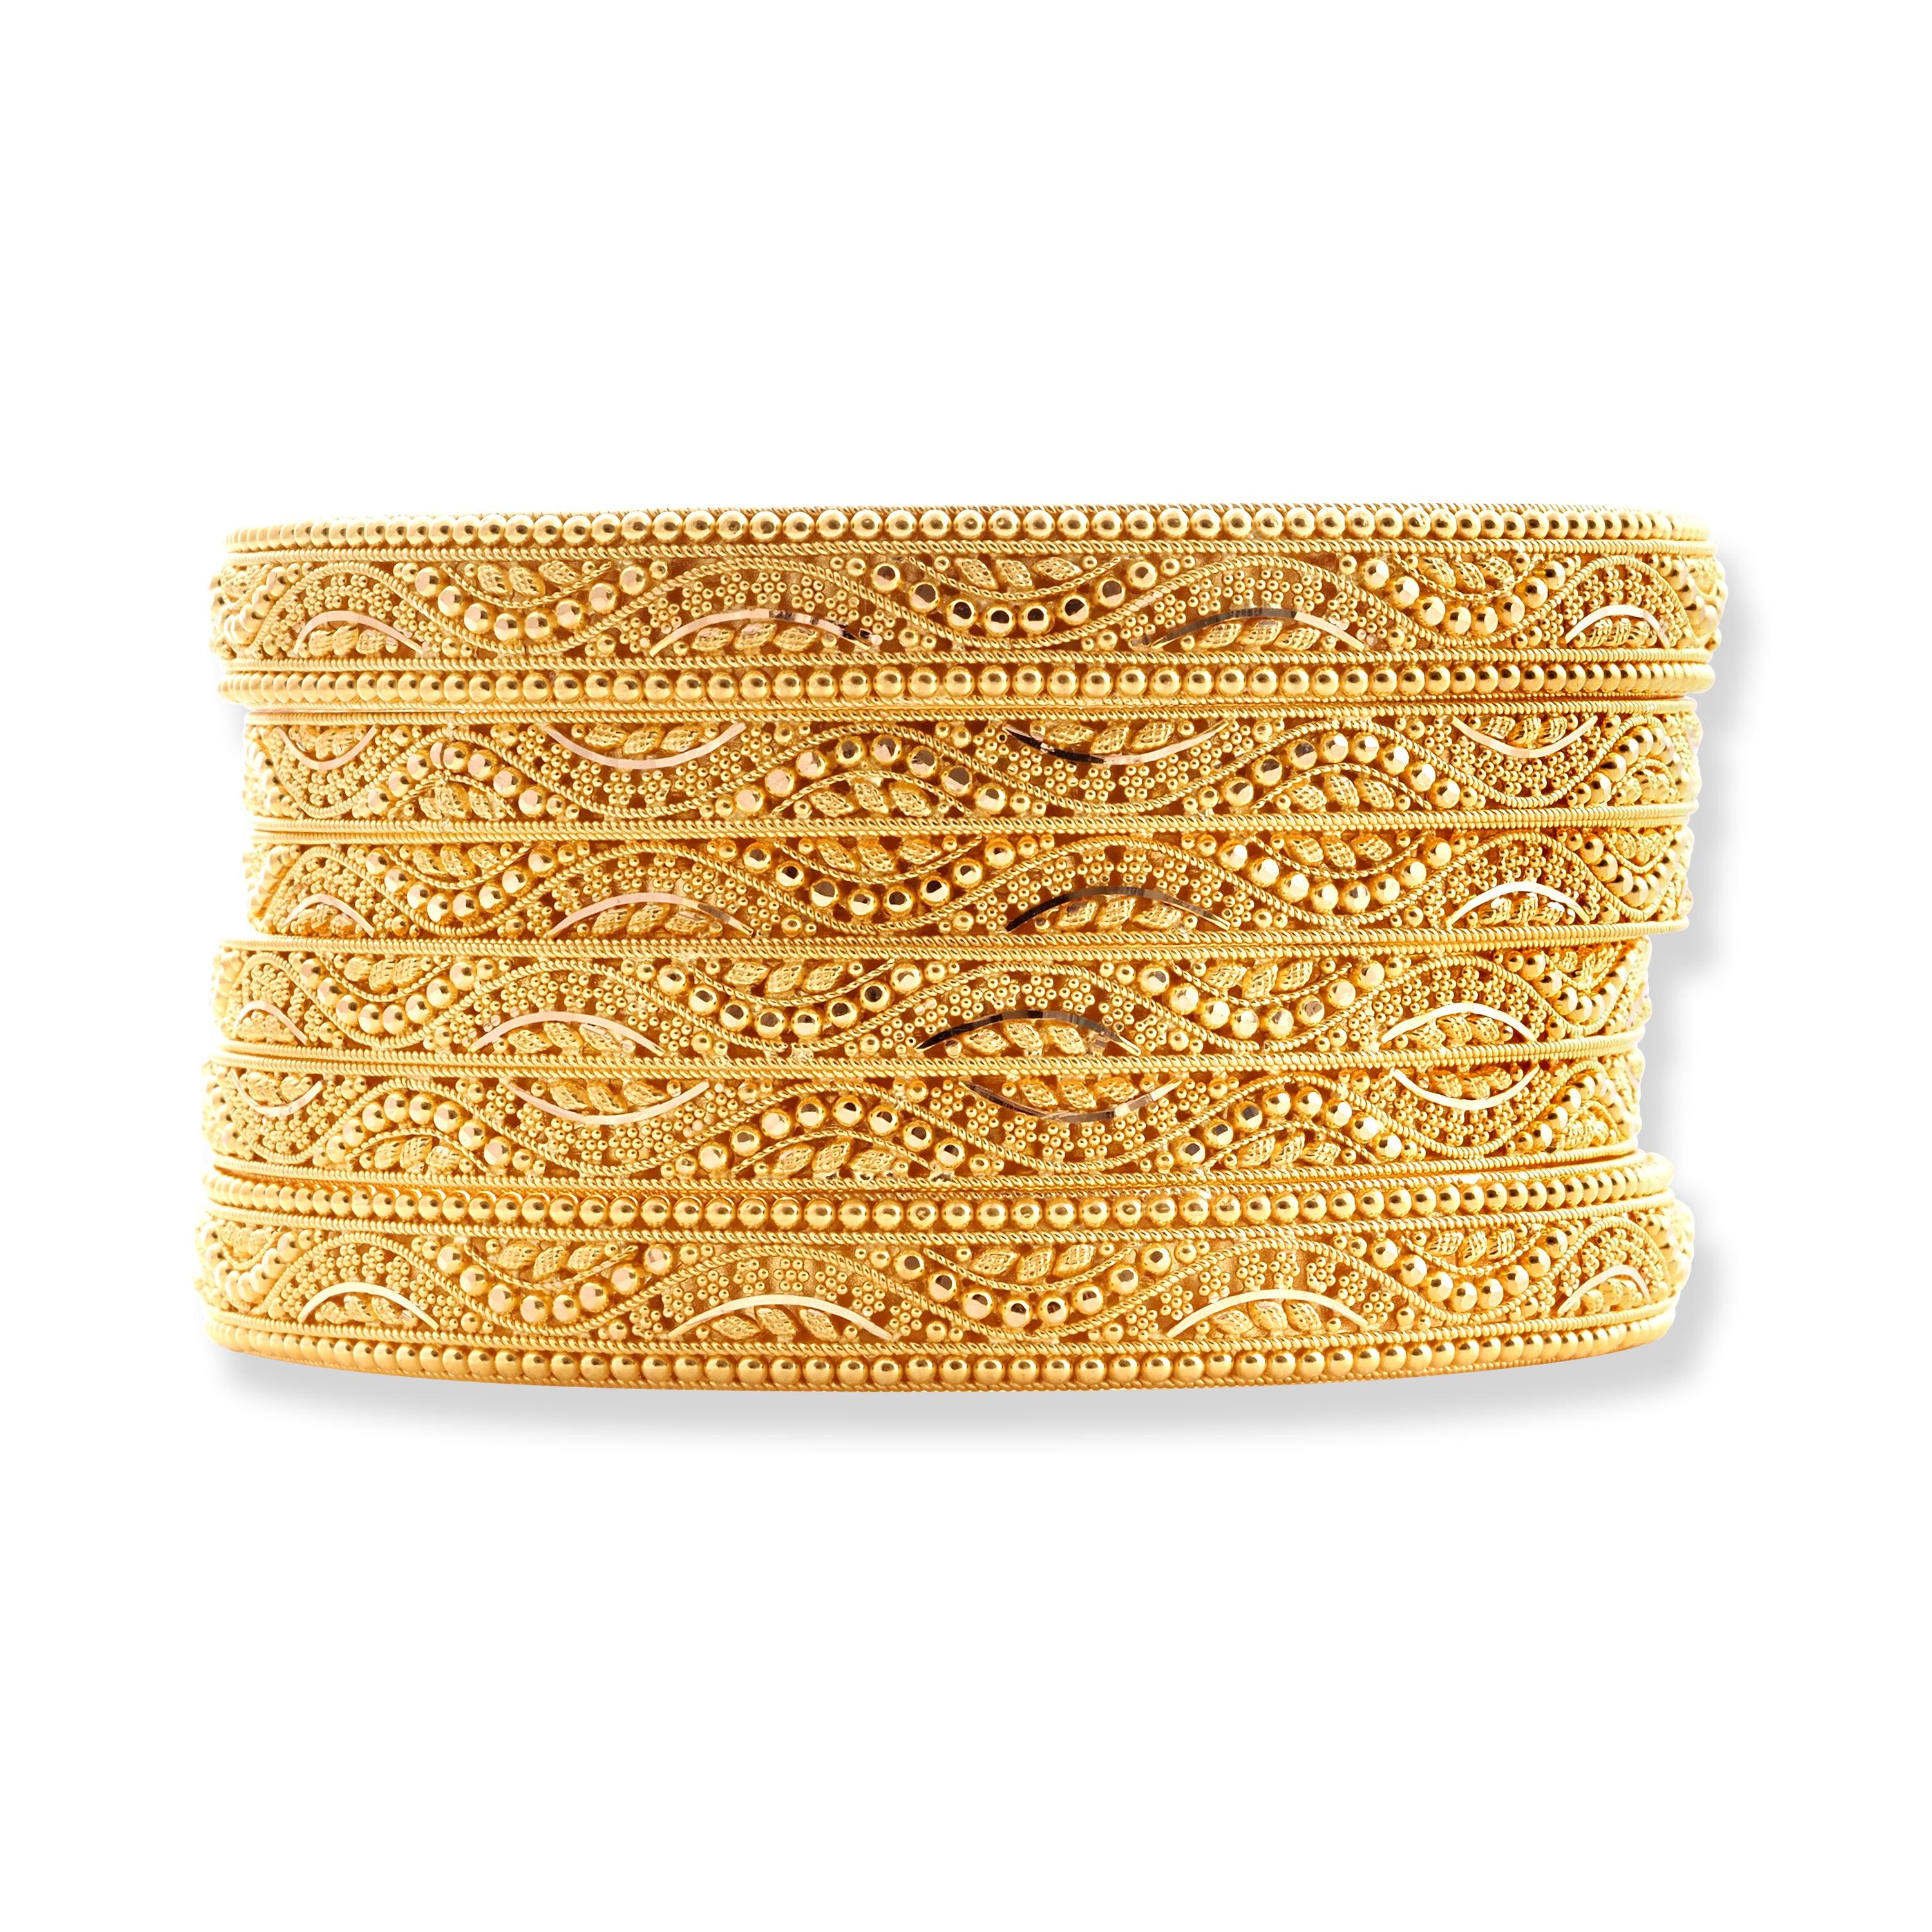 Set of Six 22ct Gold Bangles with Diamond Cut Bead Design B-8569 - Minar Jewellers